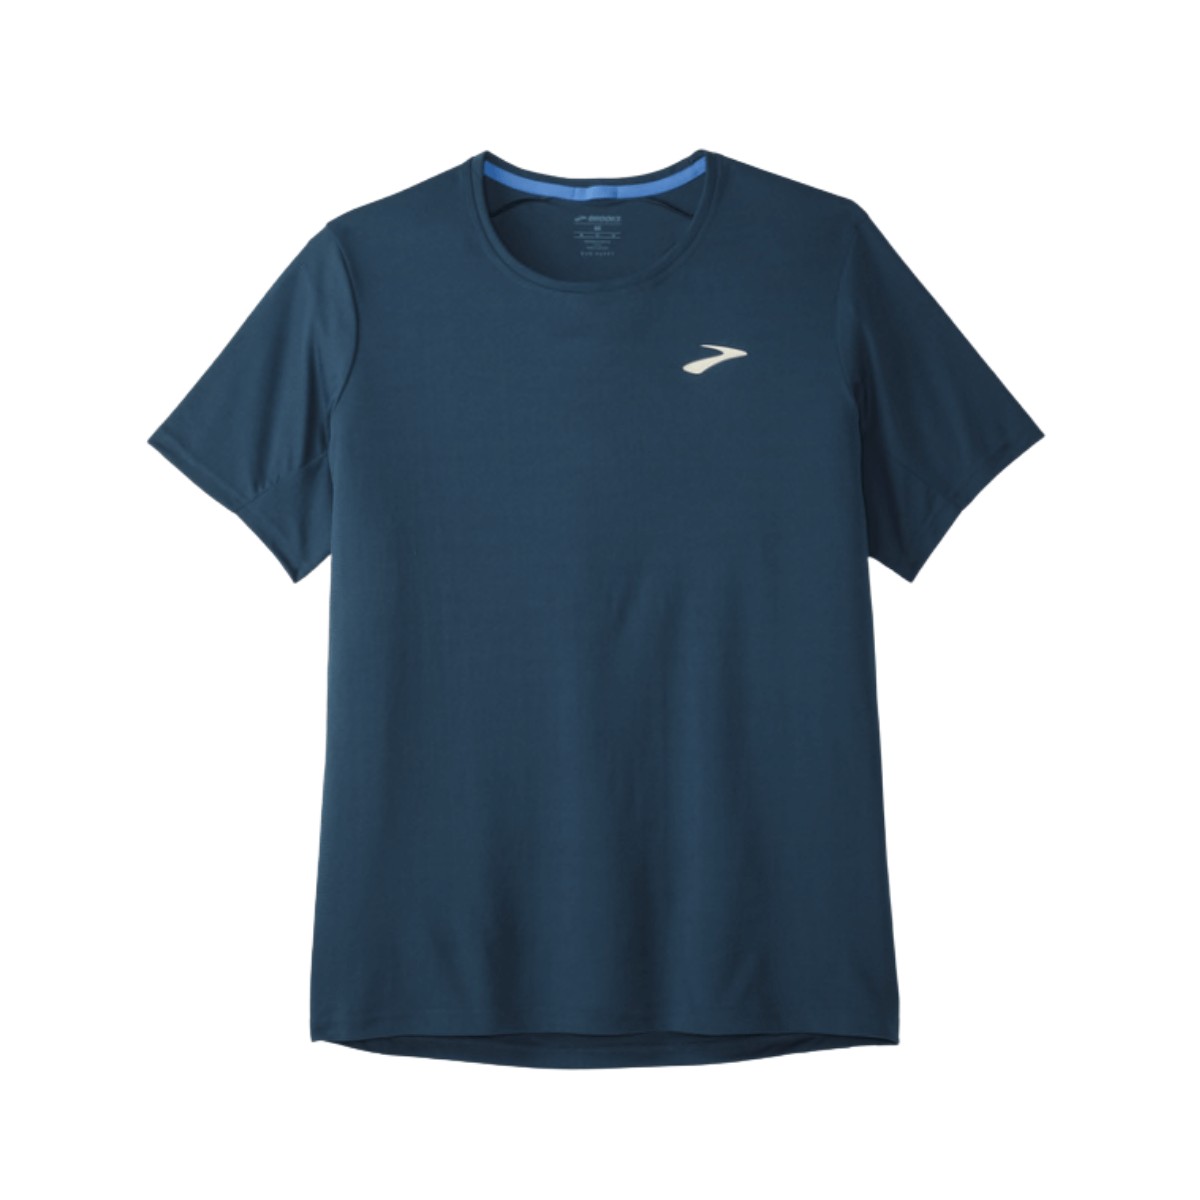 Brooks Atmosphere Short Sleeve T-Shirt Navy Blue, Size S